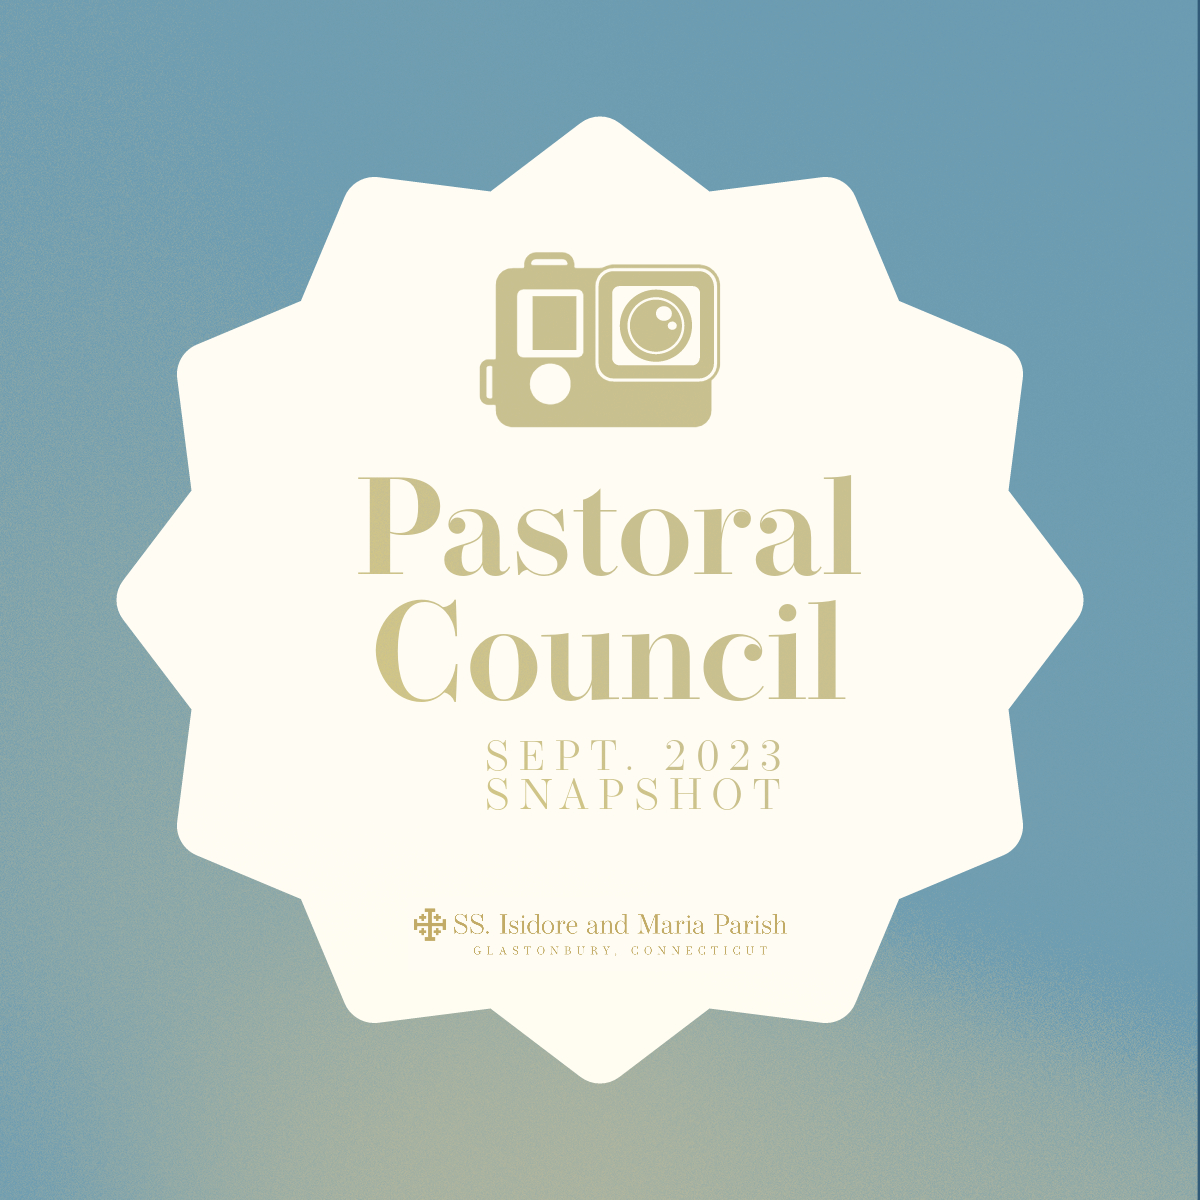 Pastoral Council Snapshot for September 2023